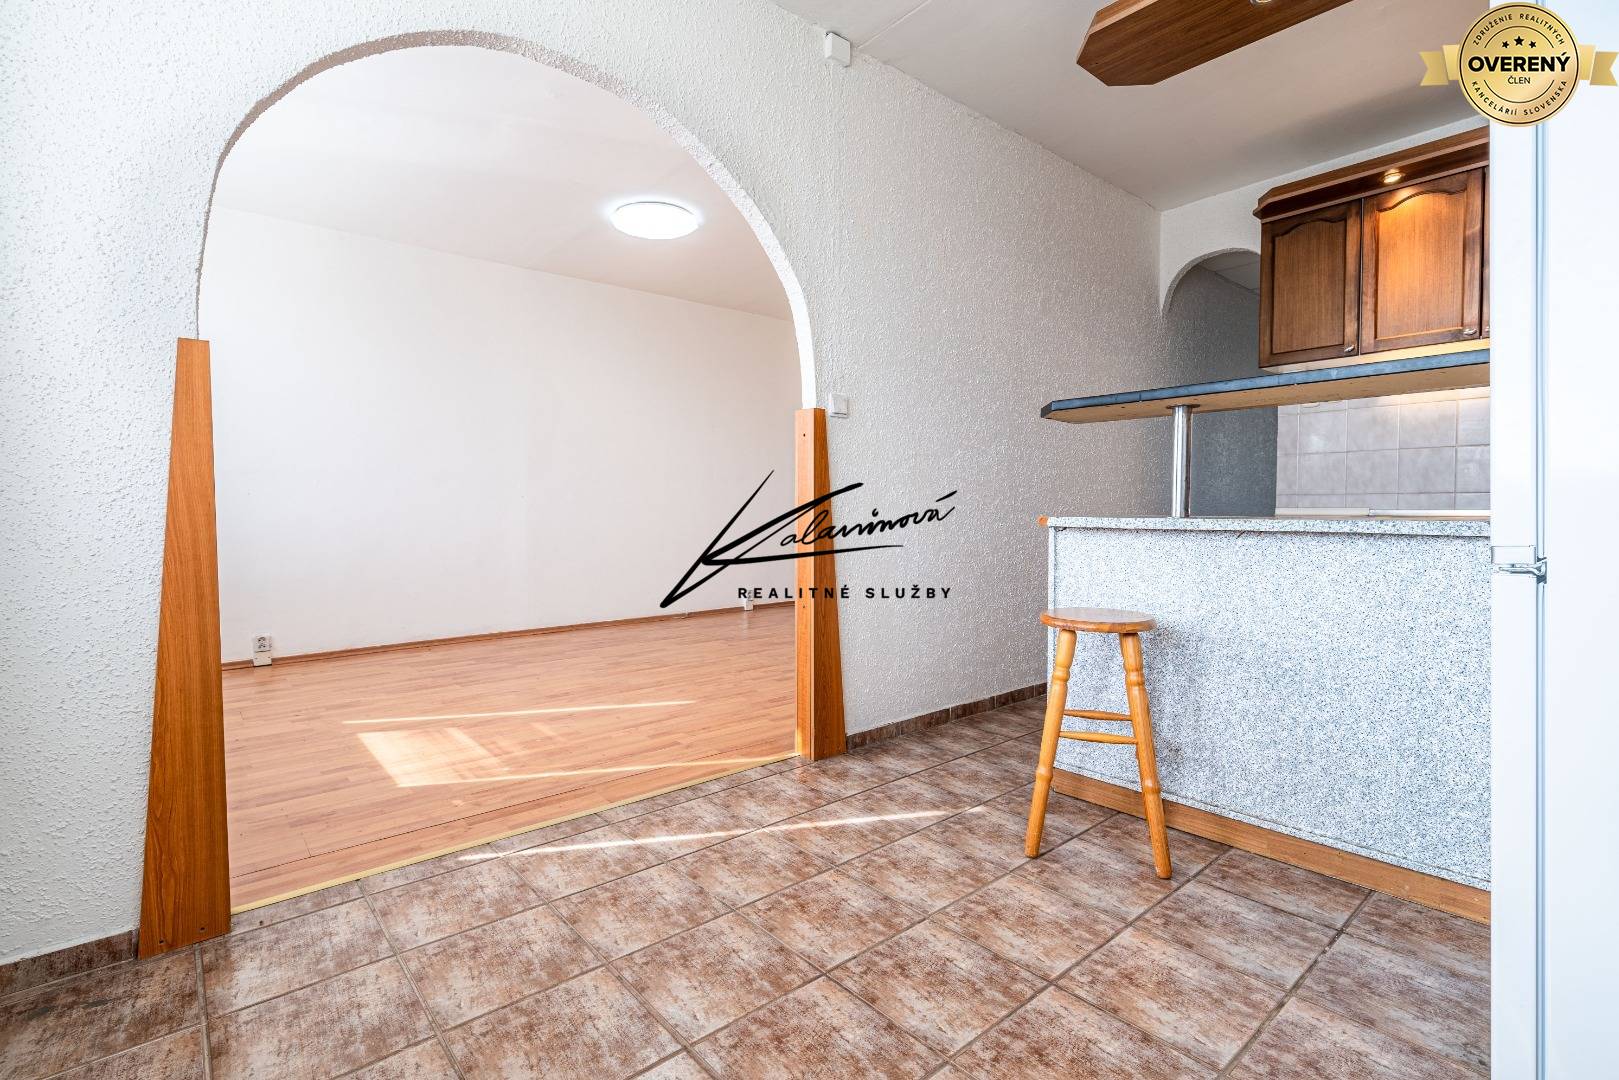 Sale Two bedroom apartment, Amurská, Košice - Nad Jazerom, Slovakia